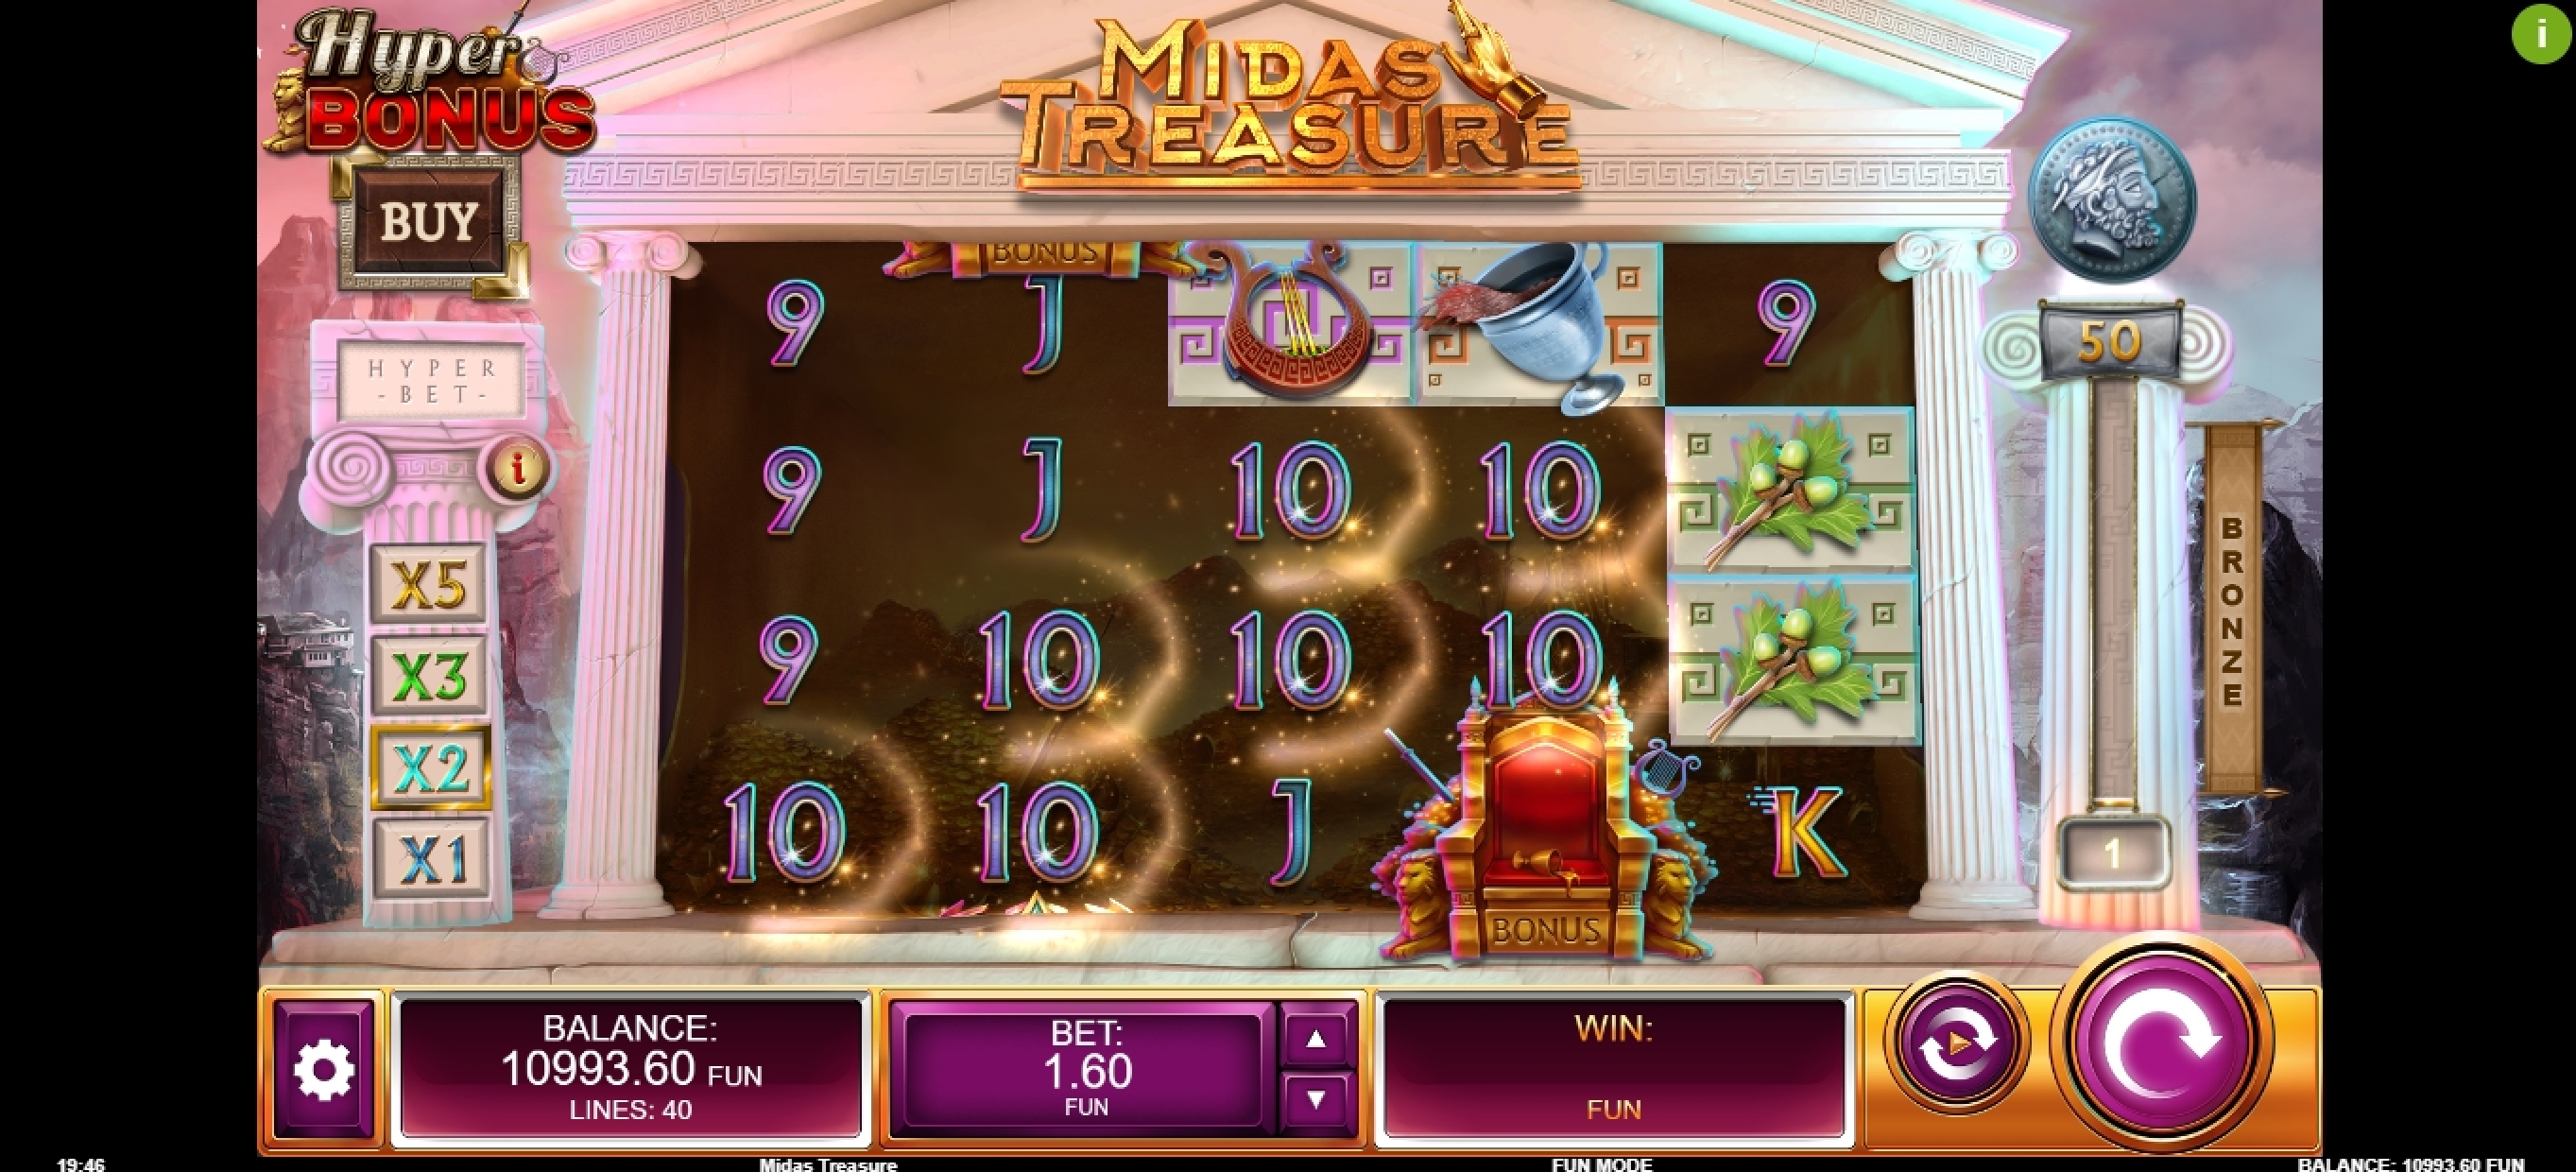 Win Money in Midas Treasure Free Slot Game by Kalamba Games